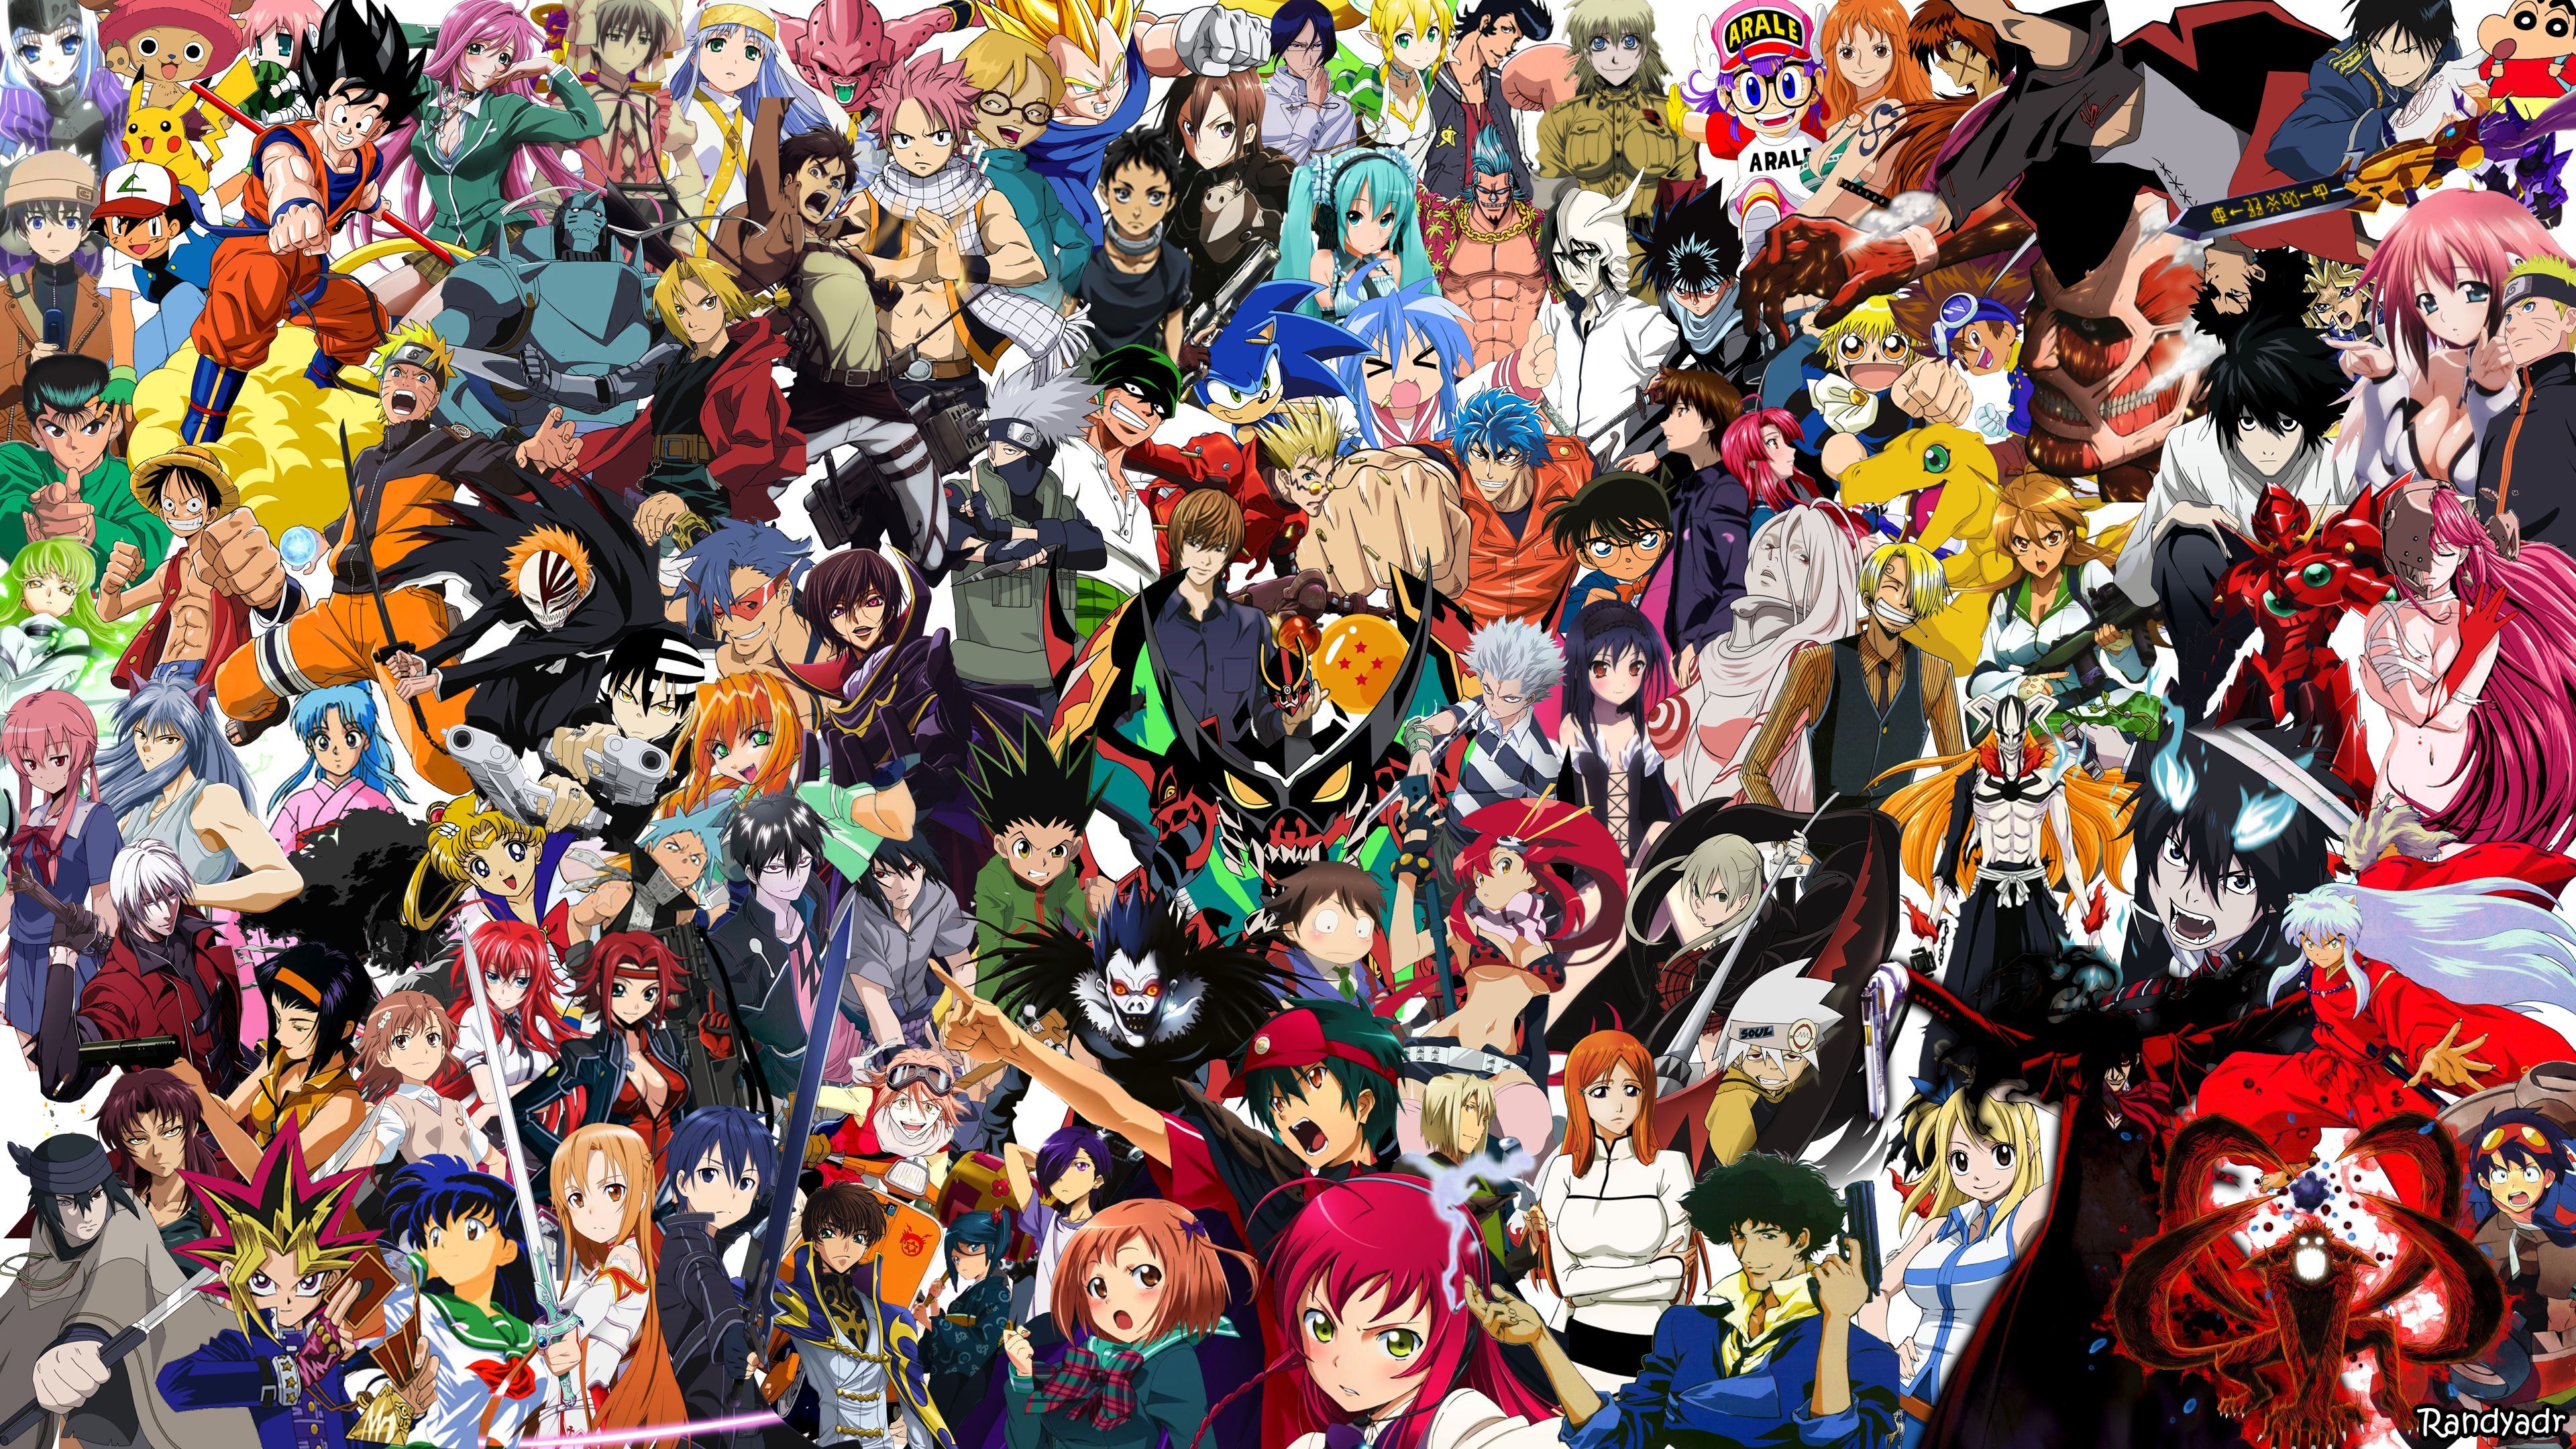 New All Anime Wallpaper. All anime, Anime, Anime crossover